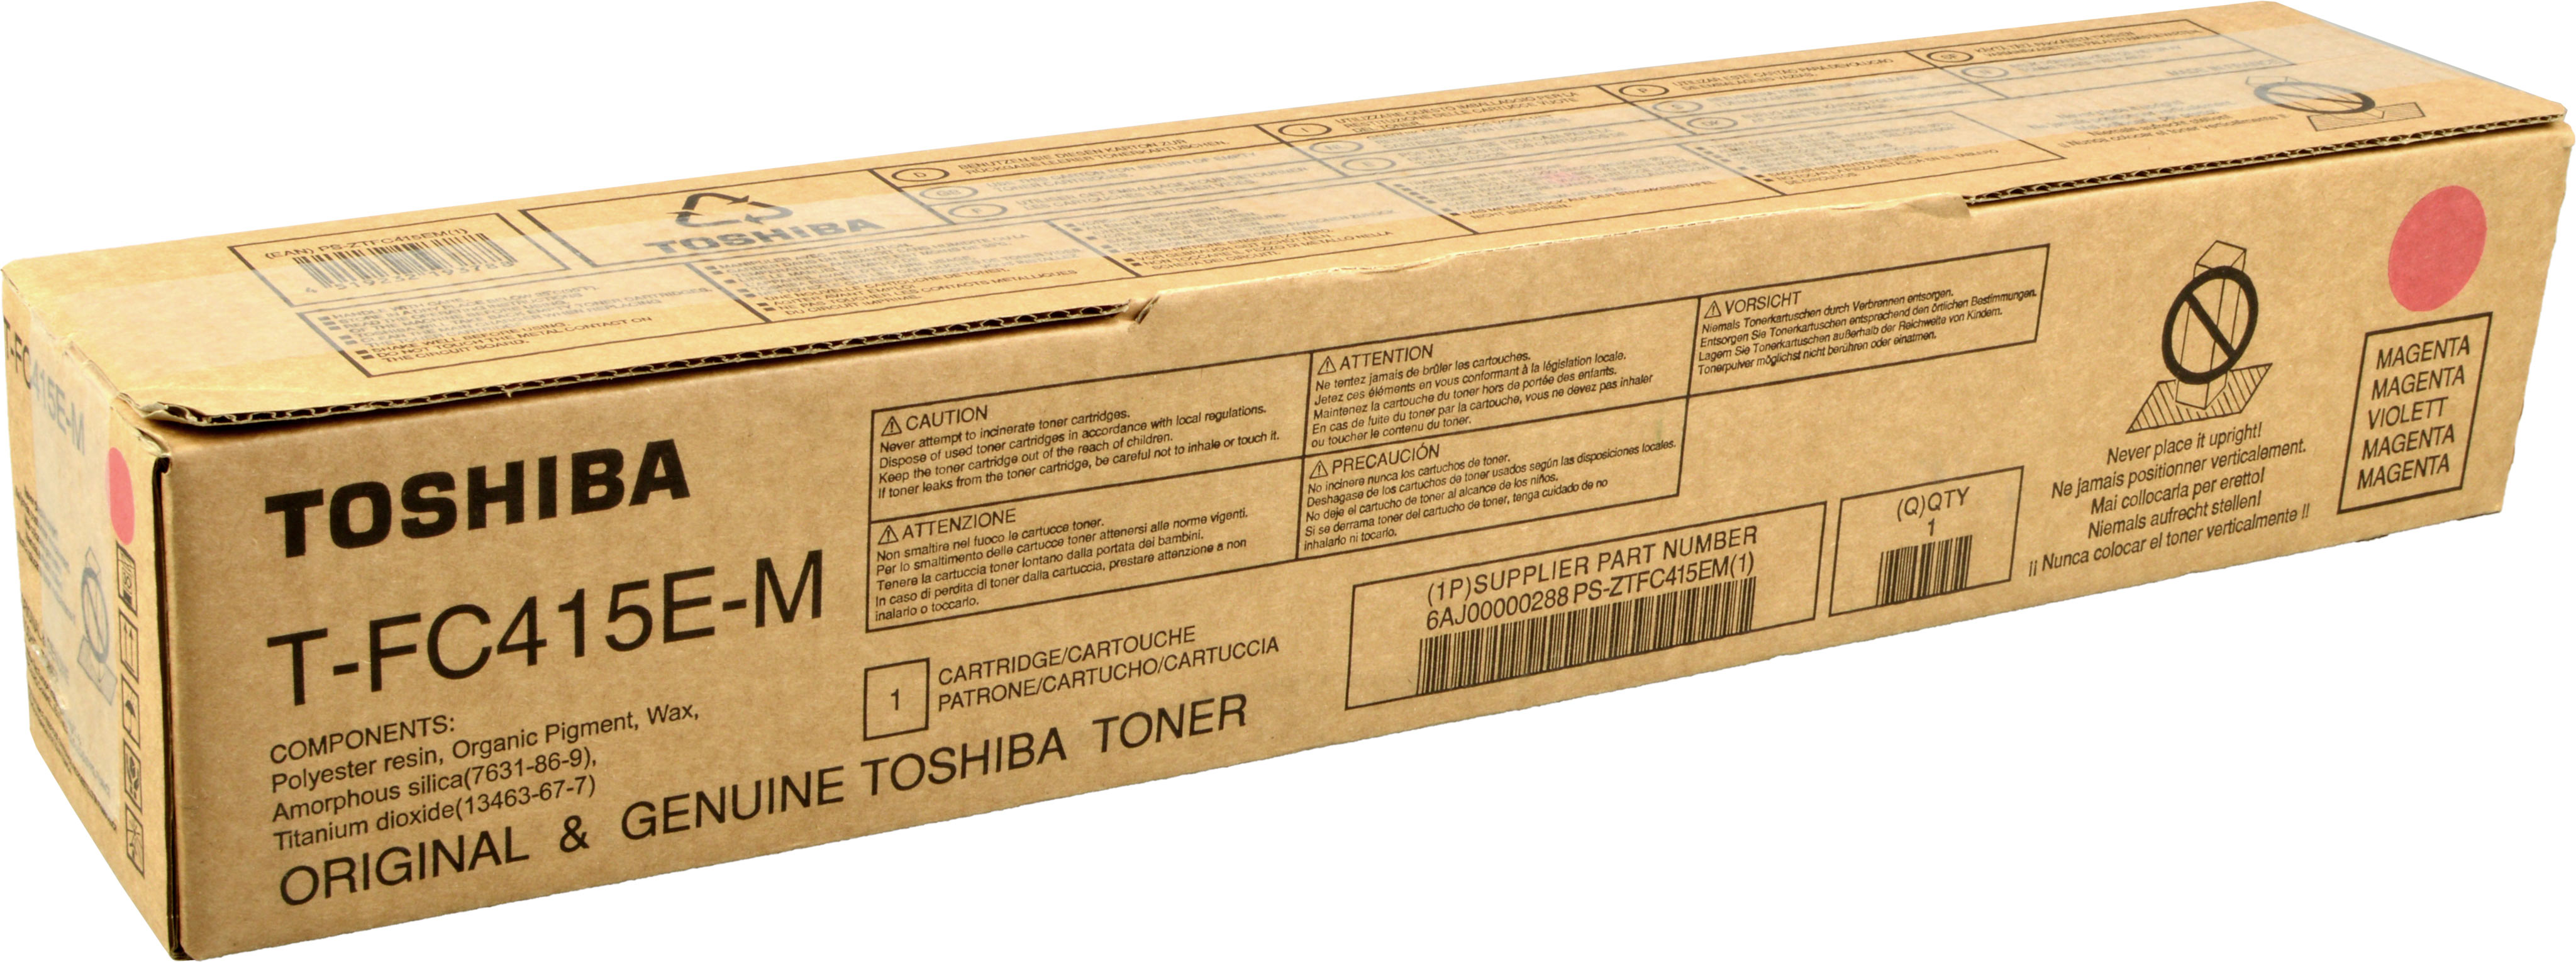 Toshiba Toner T-FC415E-M  6AJ00000178  magenta